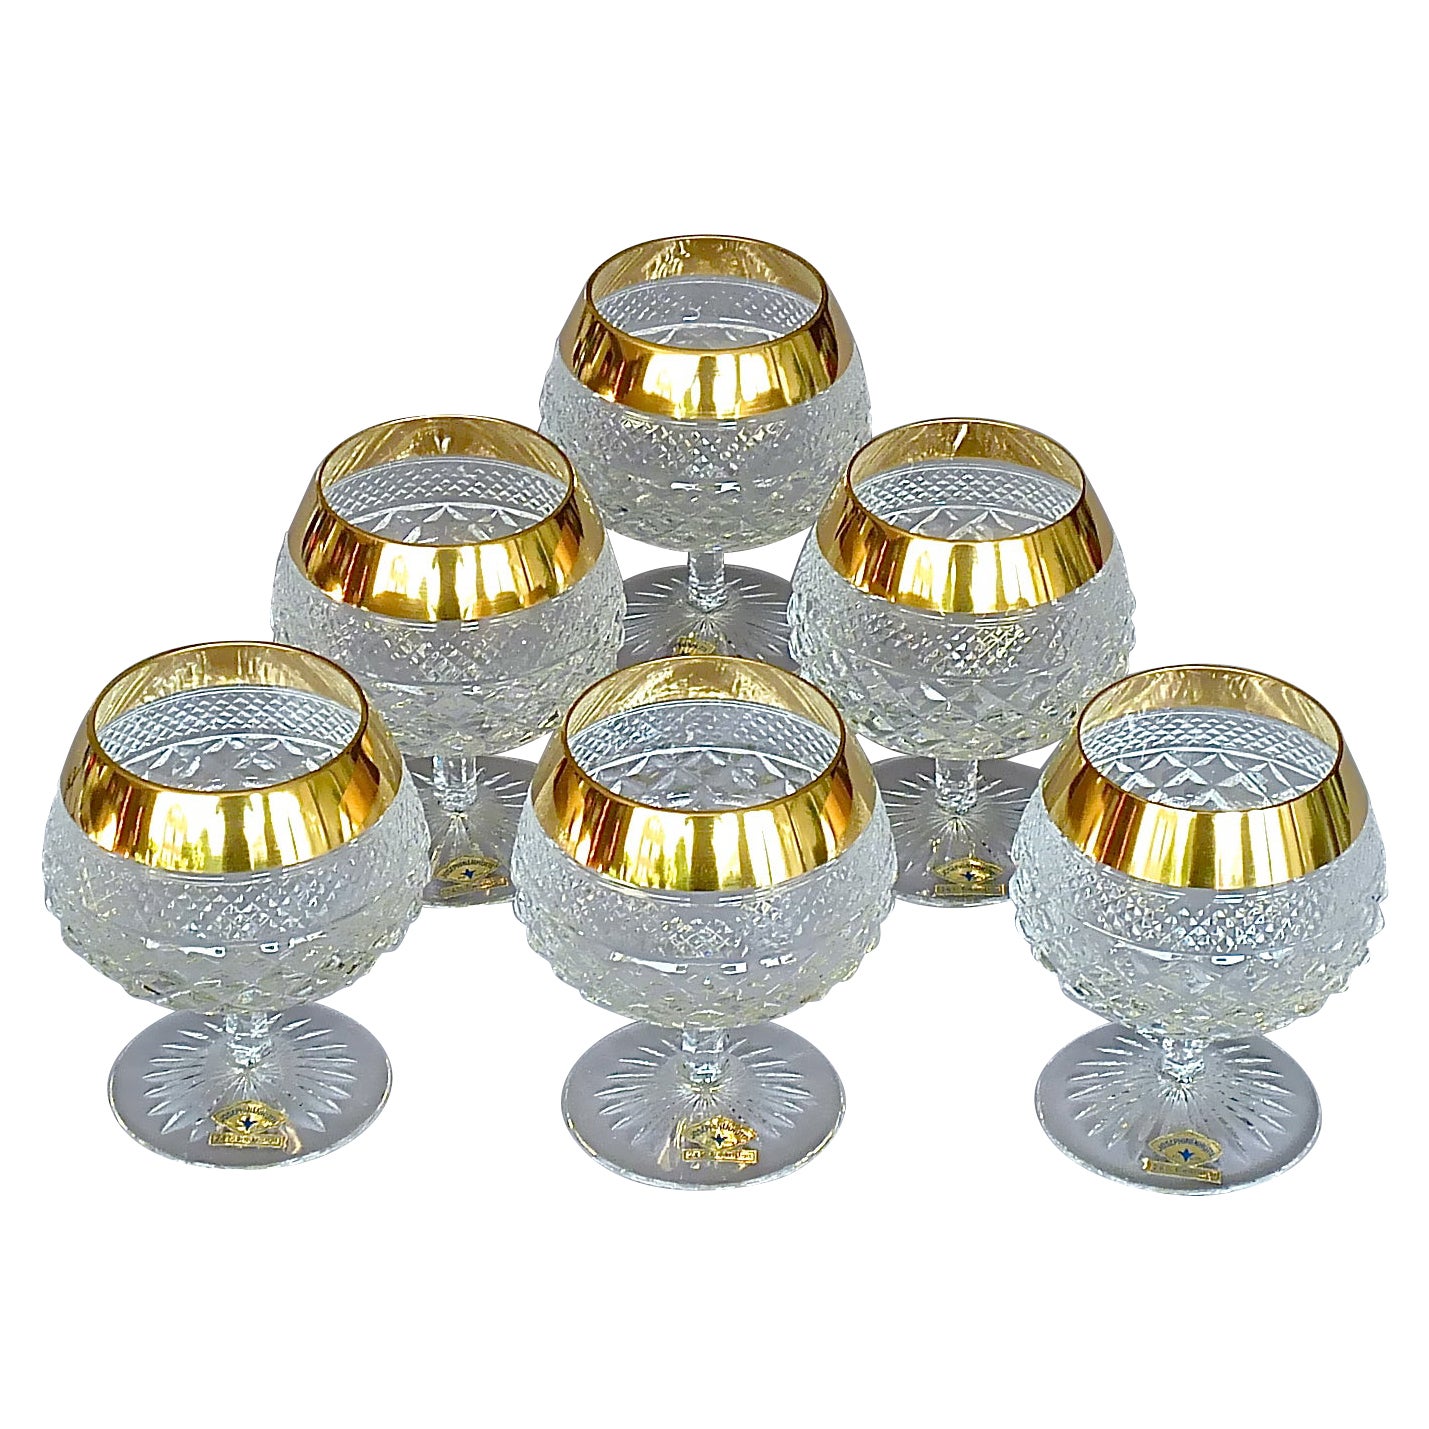 Edelsteine 6 Cognacfarbene Gläser Gold Kristallglas Stemware Josephinenhuette Moser